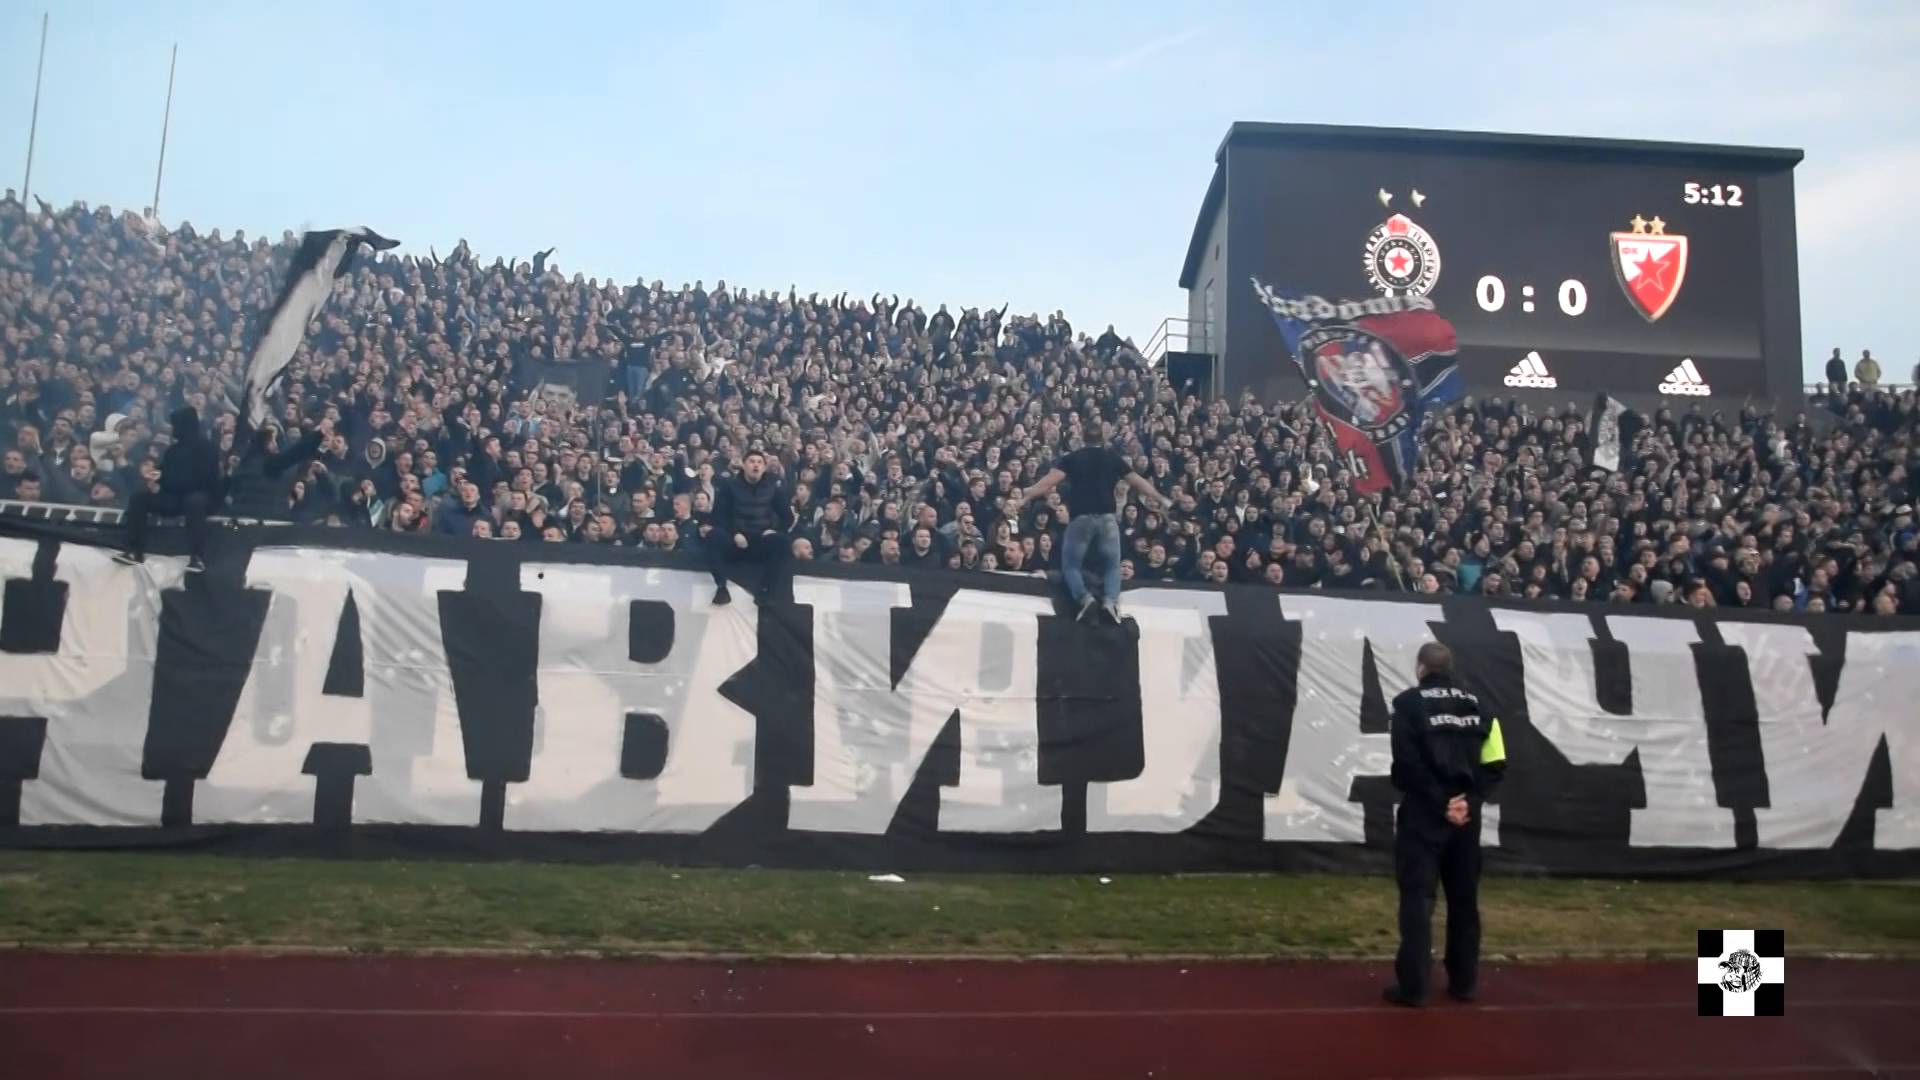 Serbian Derby: Partizan & Red Star. All about the Derby. Derby